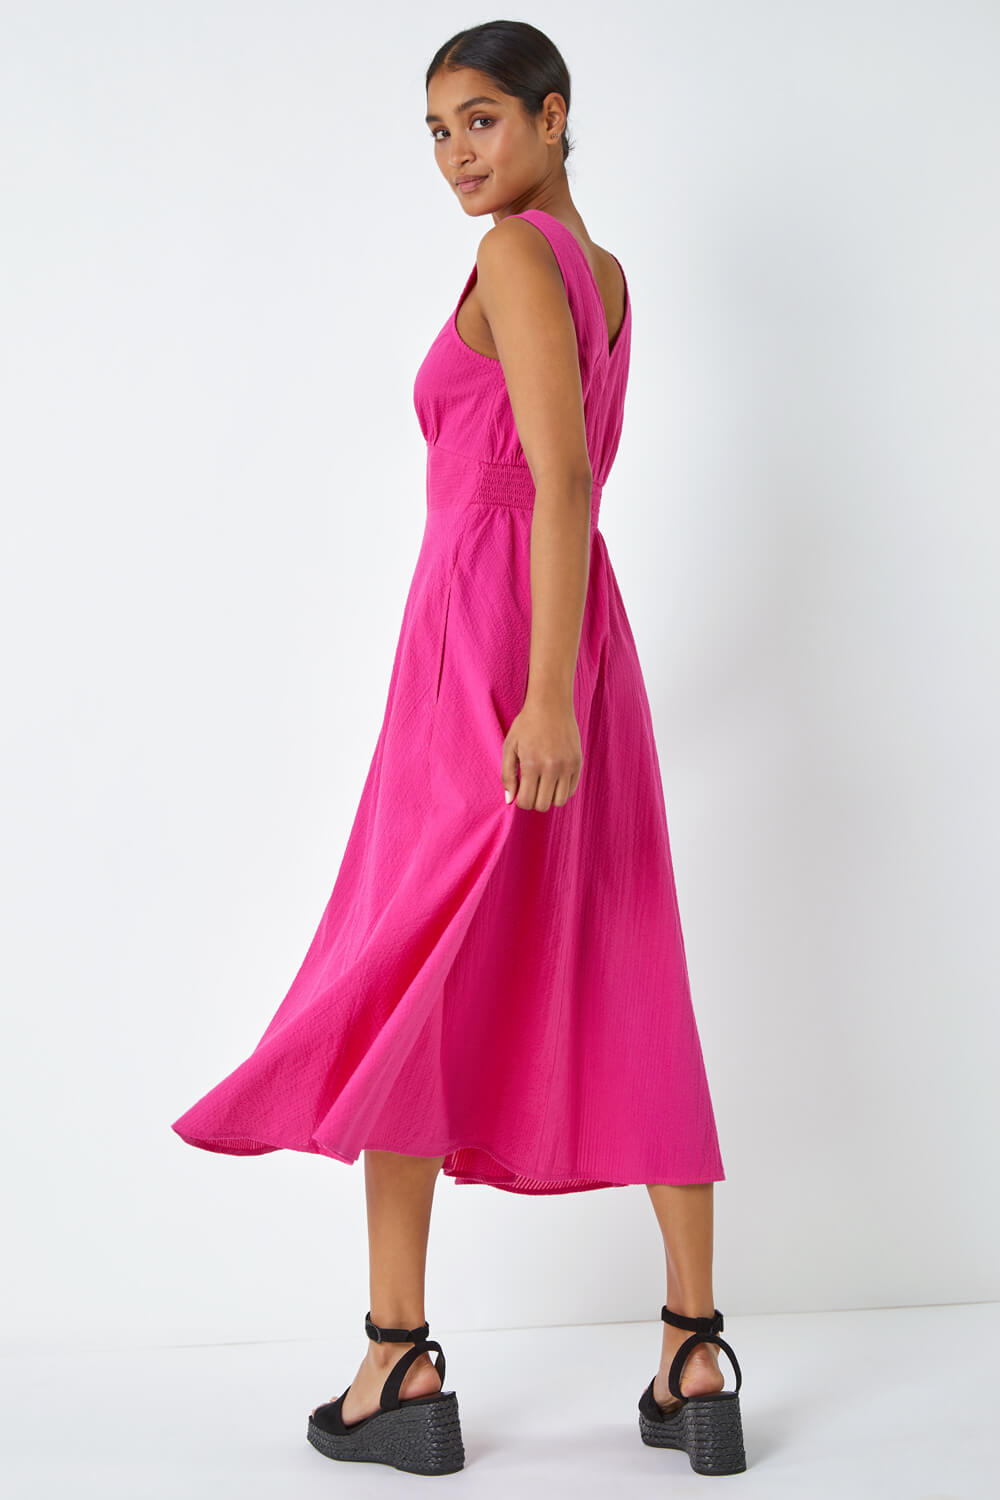 PINK Sleeveless Cotton Midi Dress, Image 3 of 5